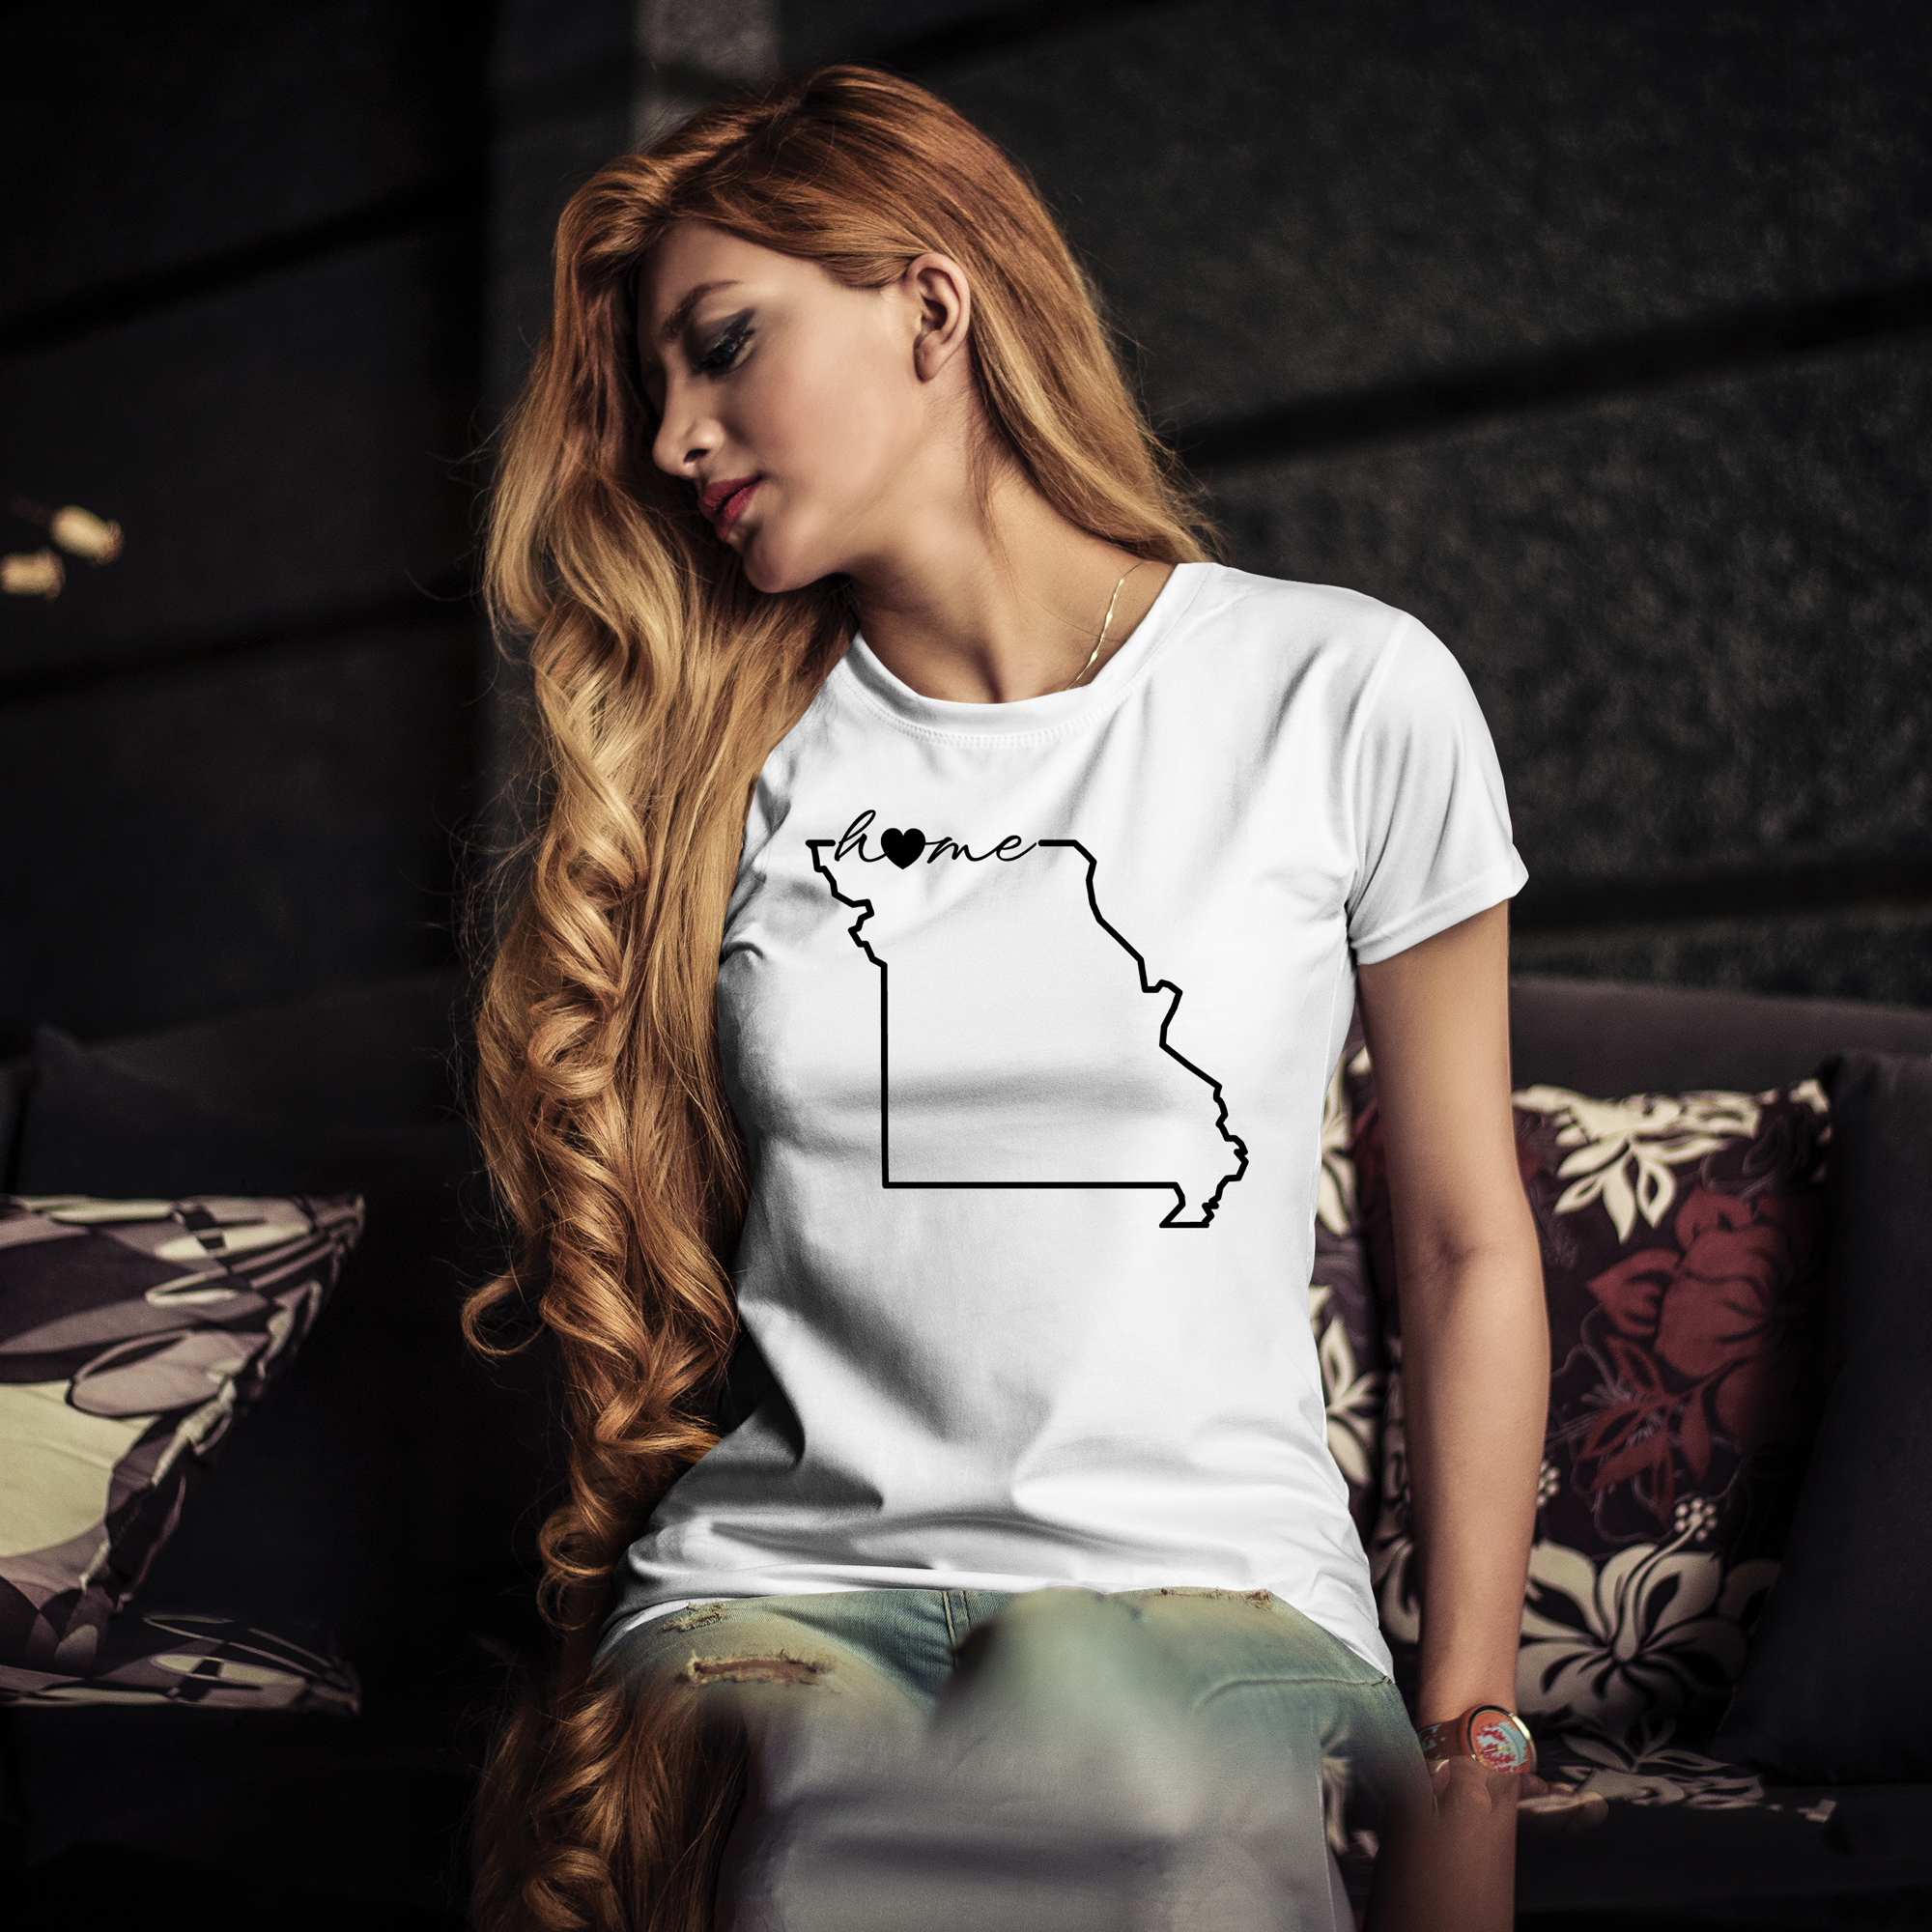 White t-shirt with black illustration of Missouri state.